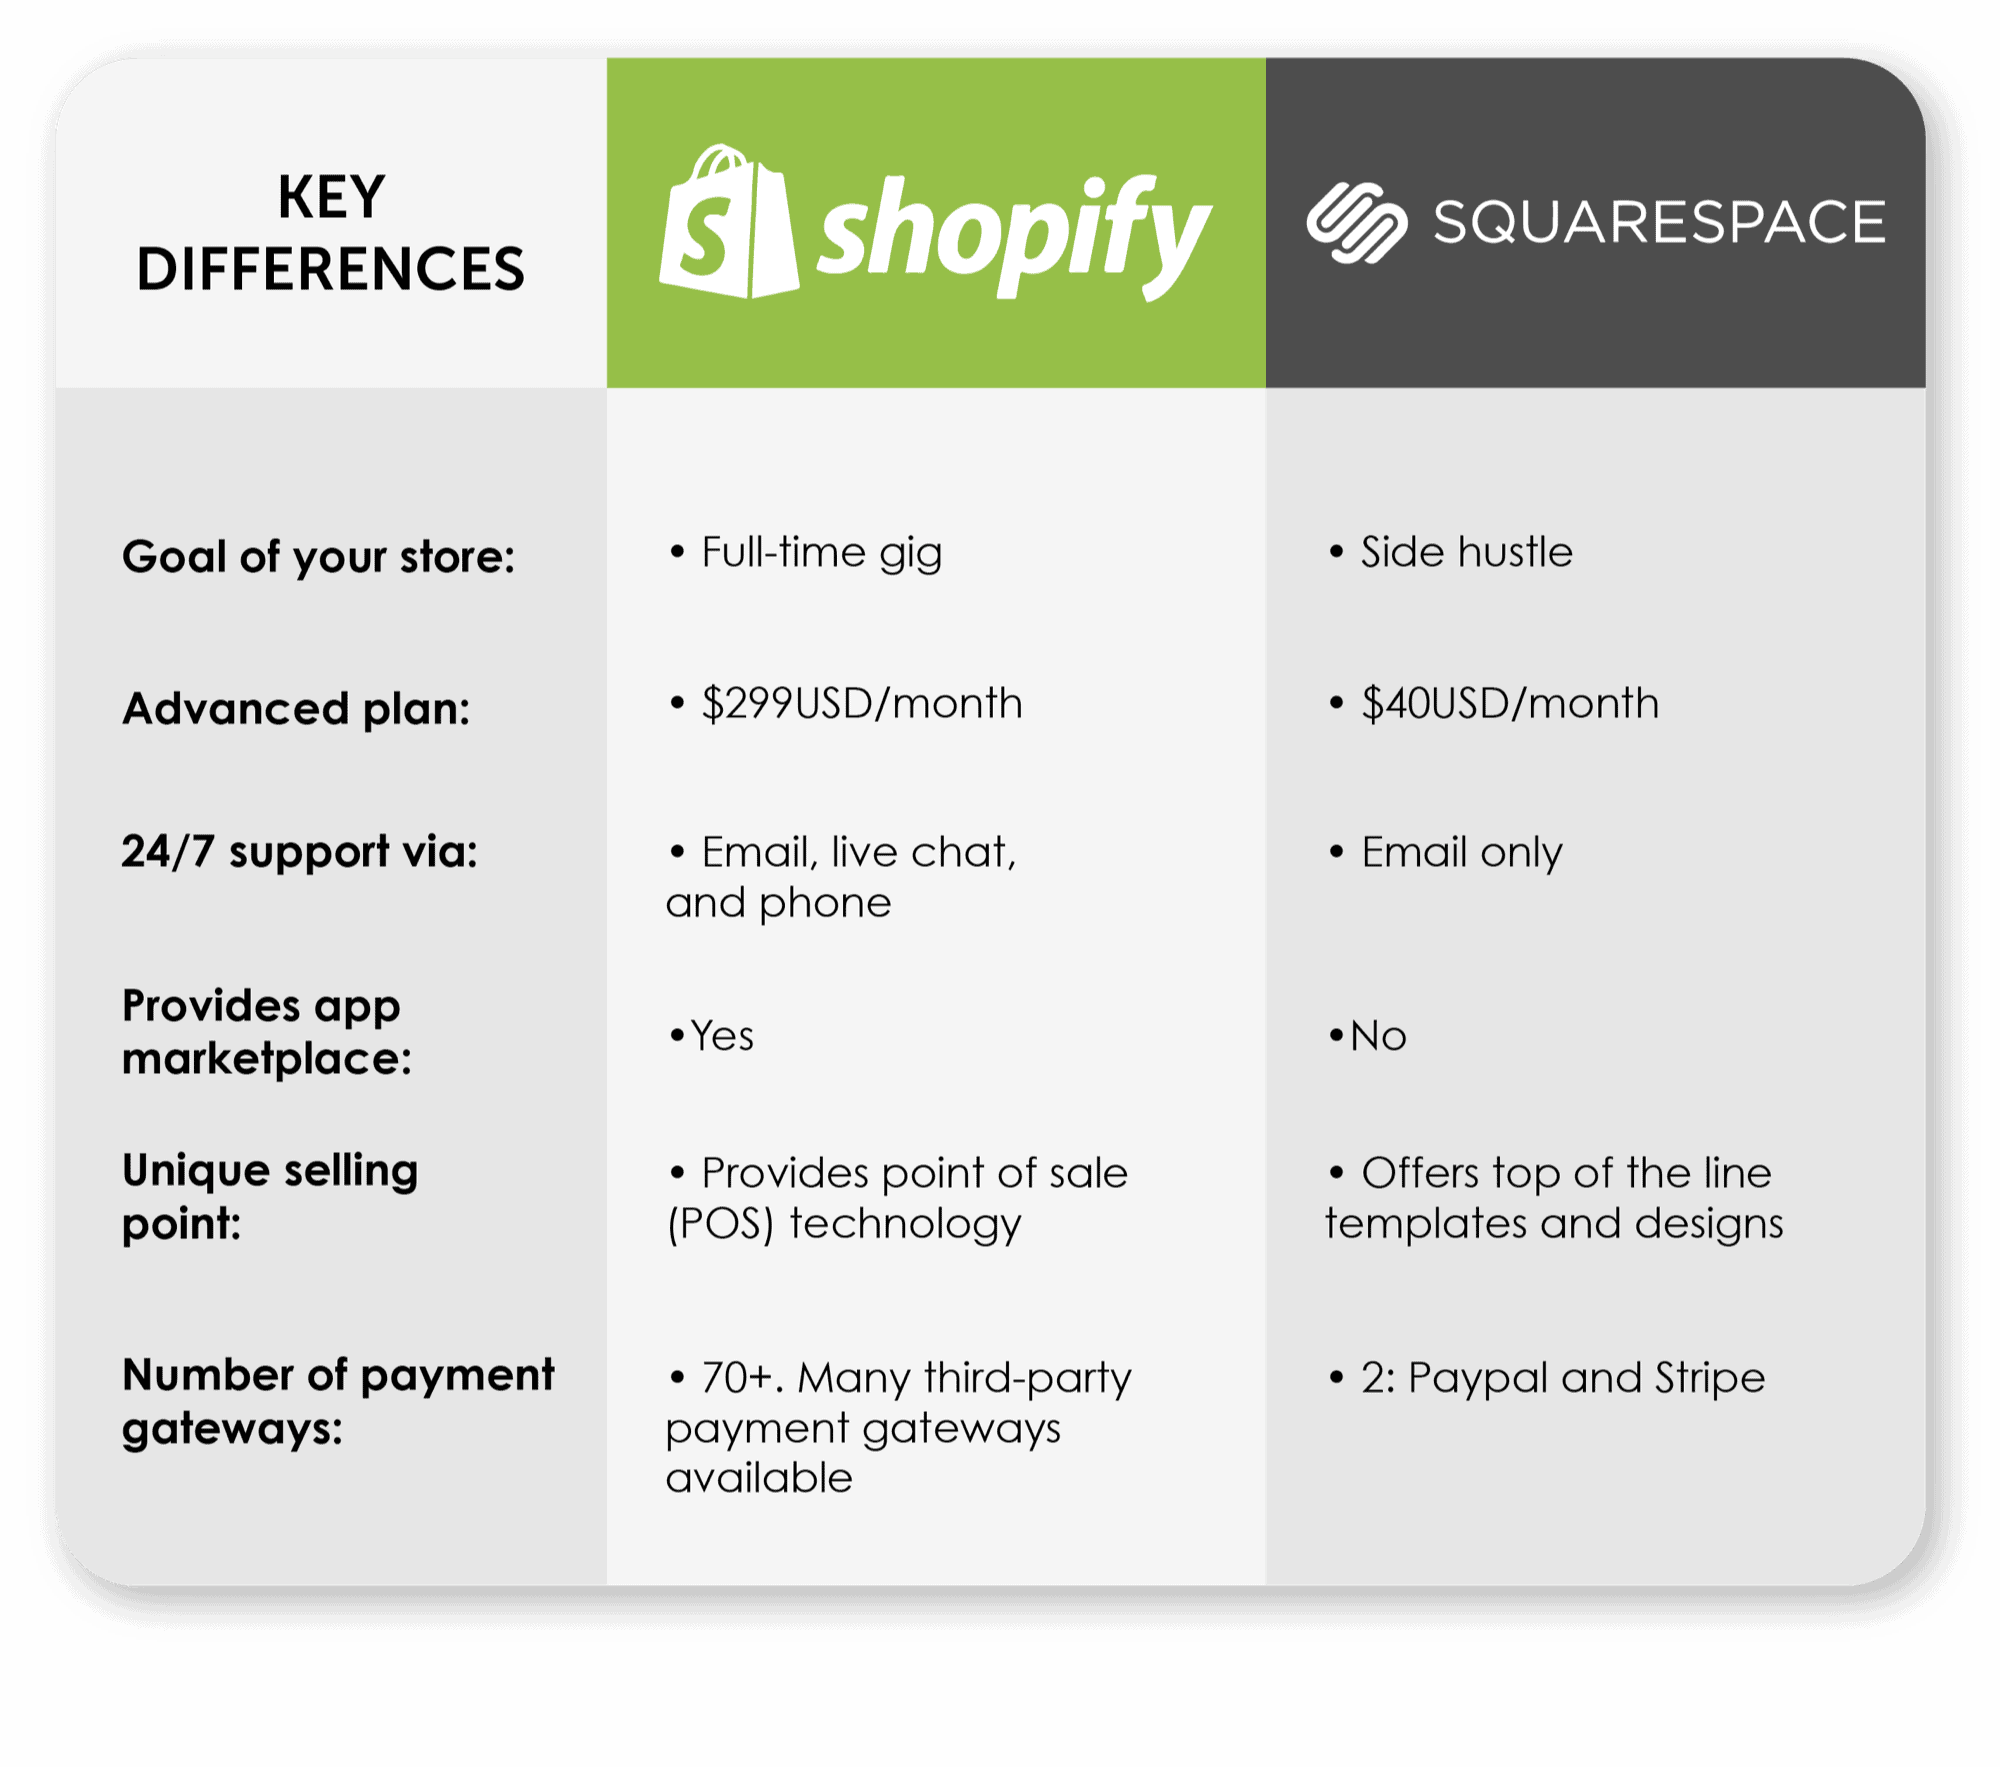 shopify vs squarespace differences